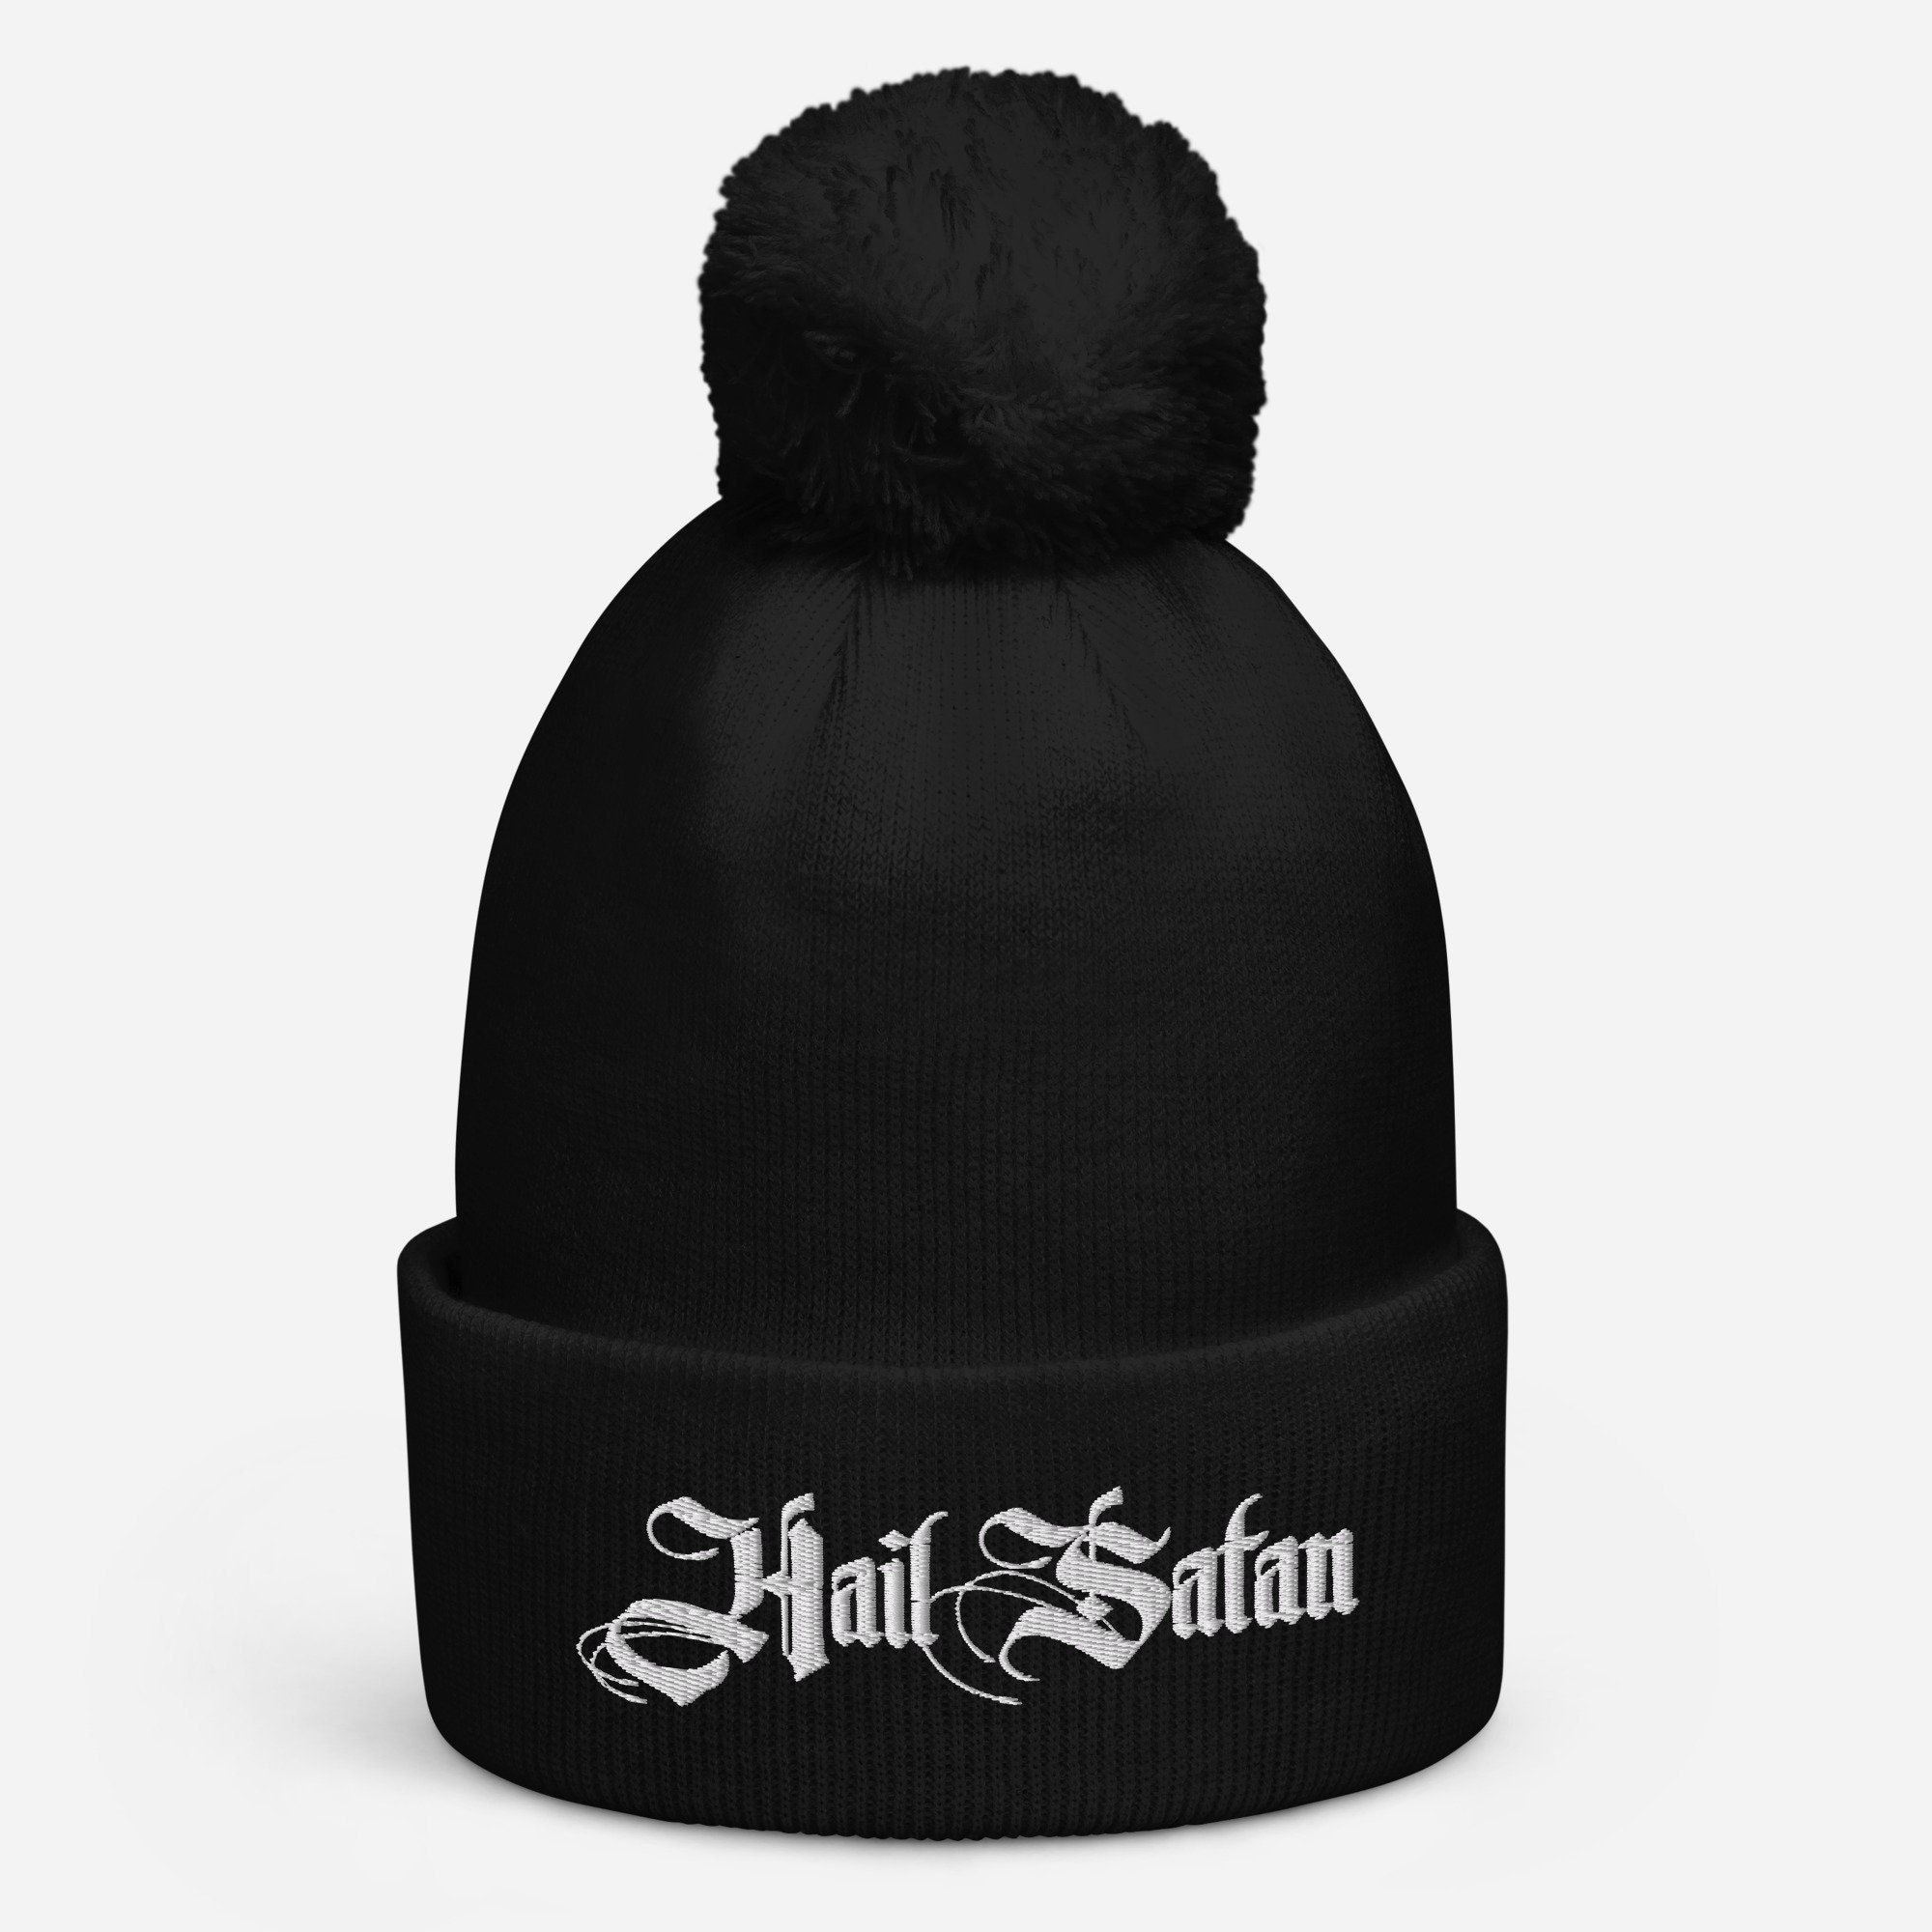 Illuminati Occult Geometric Satanic Unisex Beanie Knit Hat Soft Warm Winter Skull Cap 